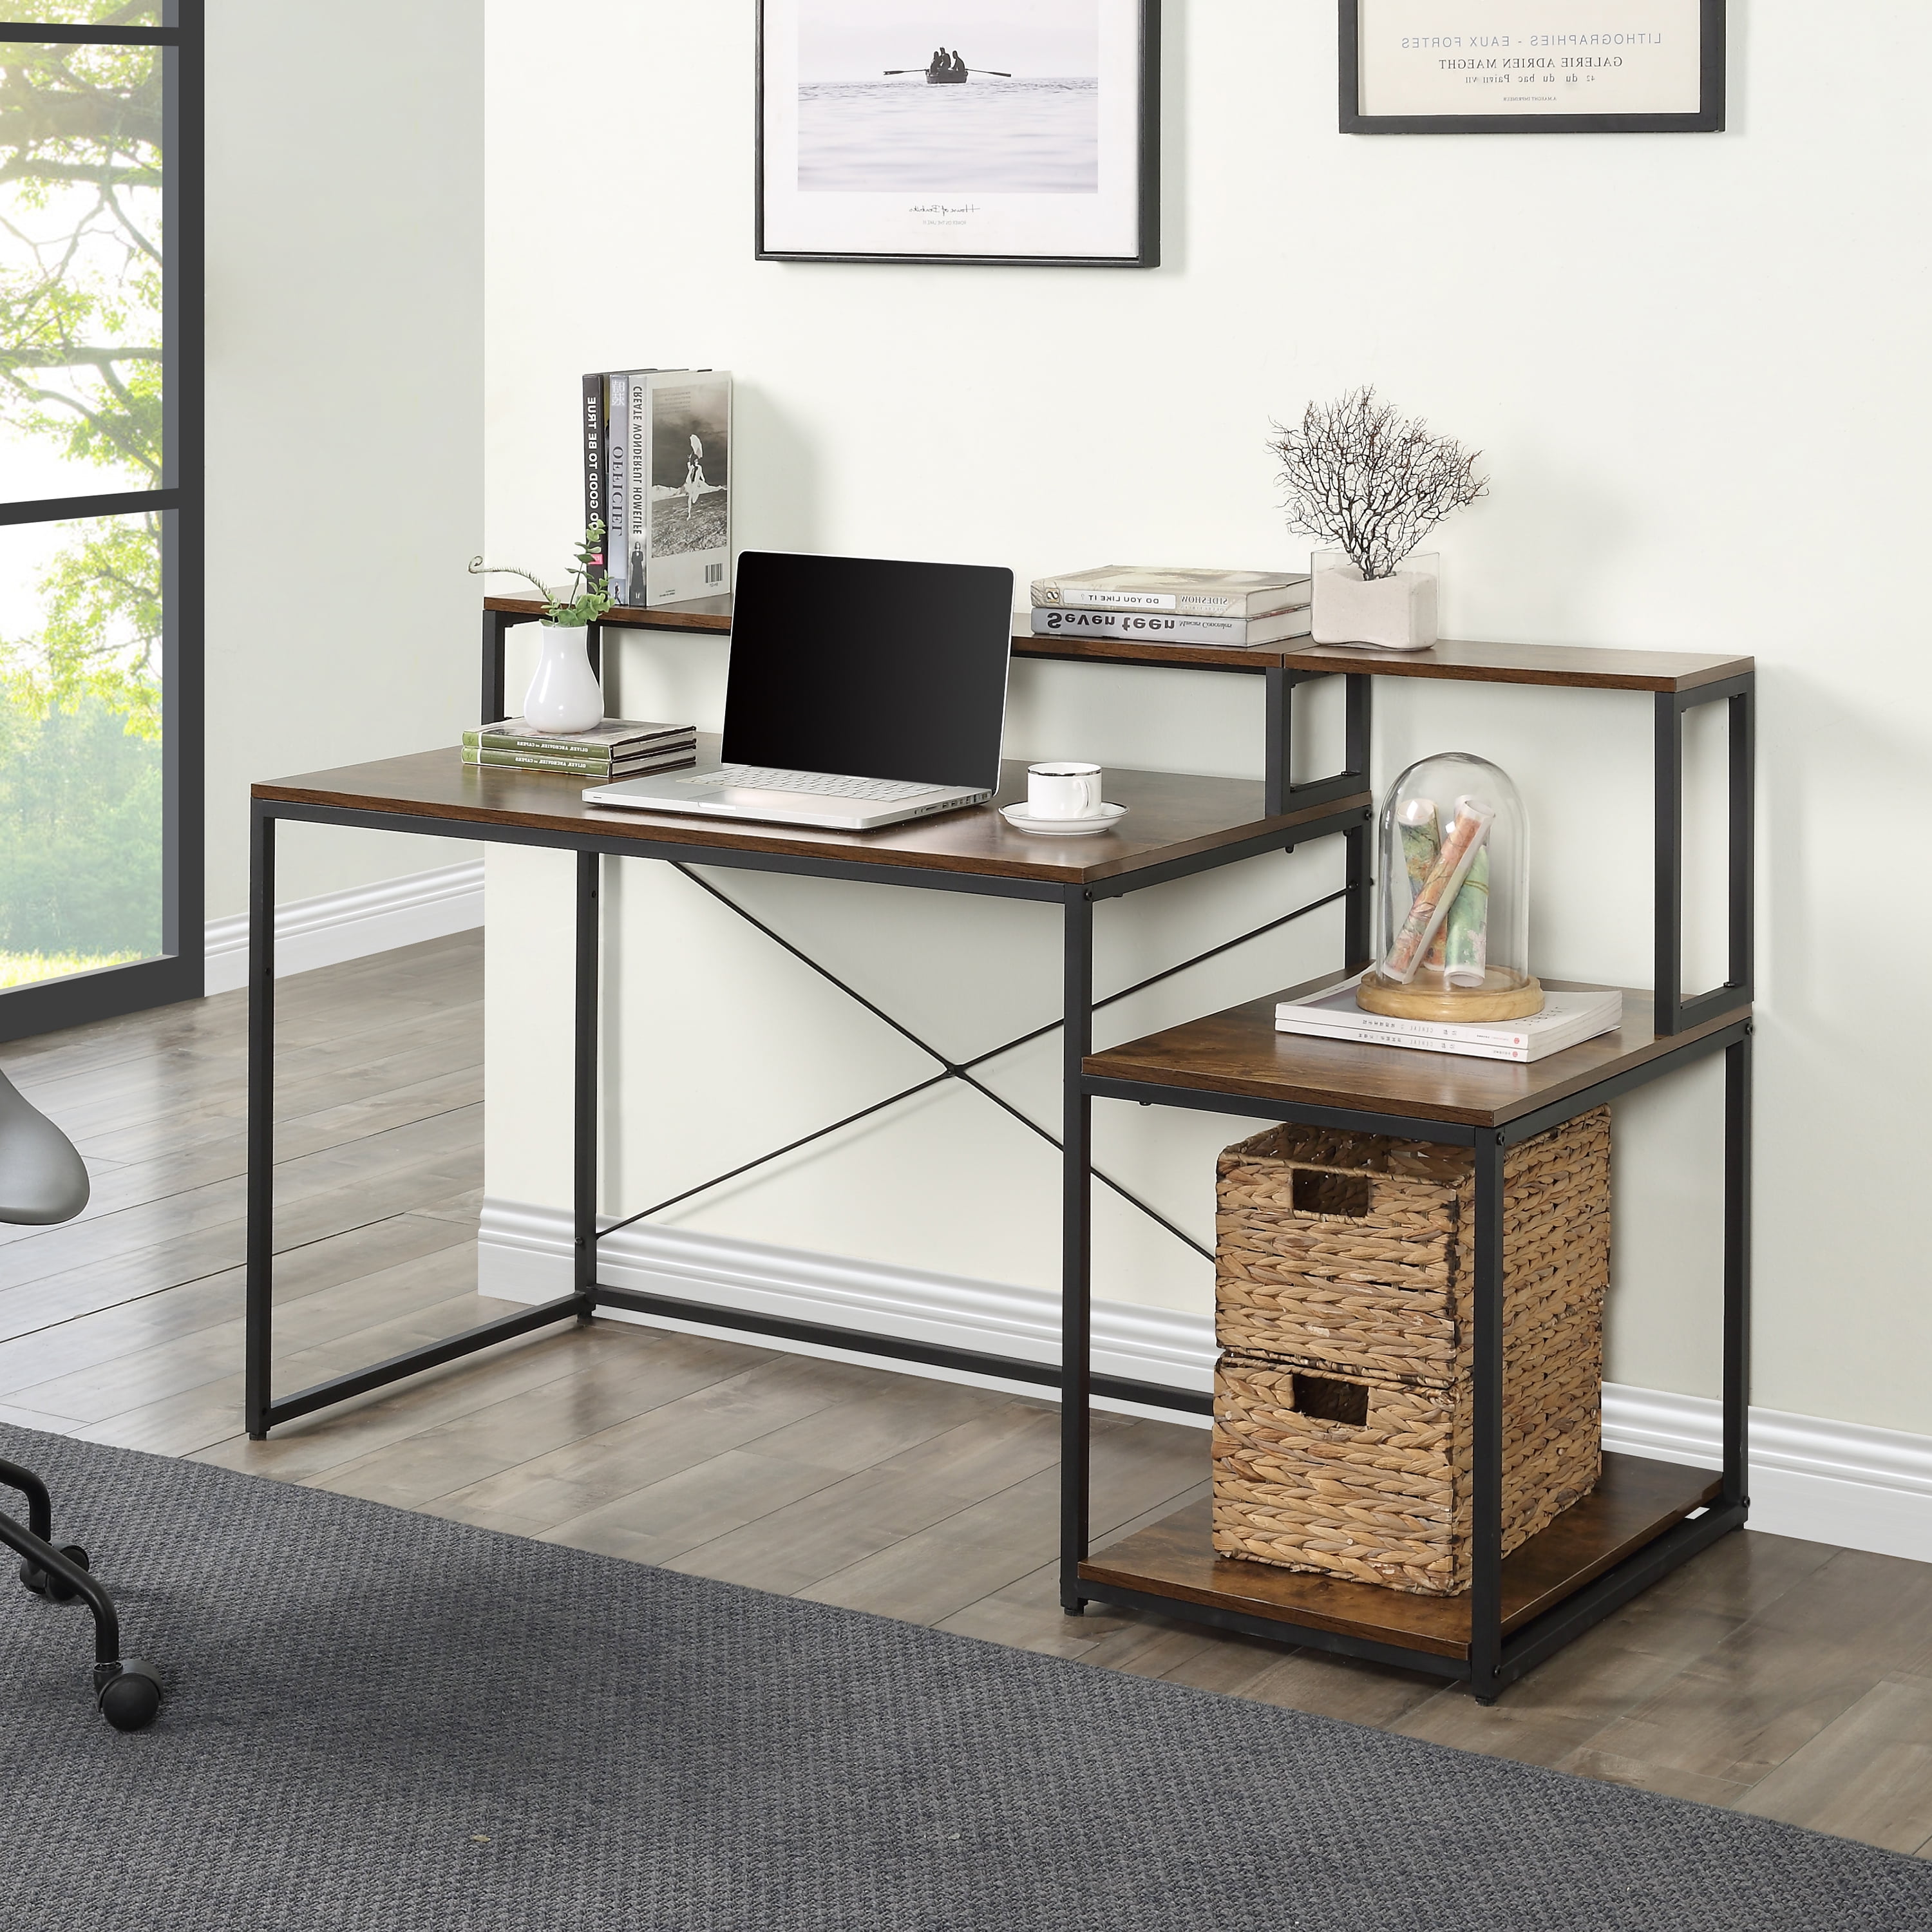 Details about   Computer Desk PC Laptop Table Study Workstation Wood Home Office w/ Shelf 